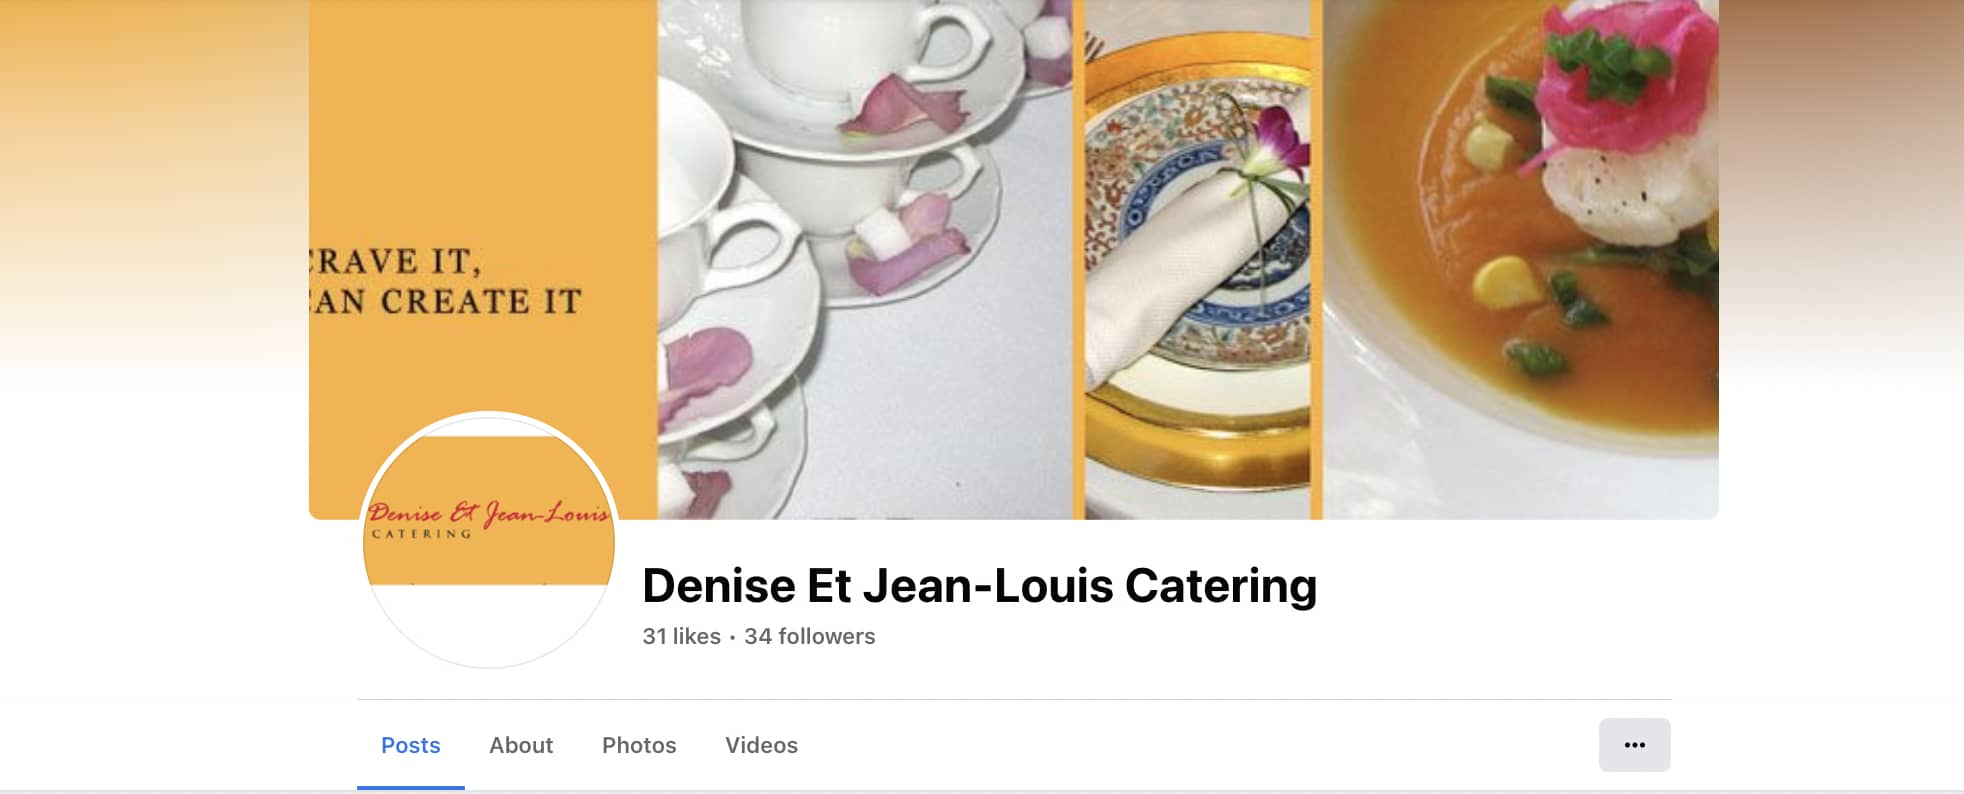 Denise & Jean-Louis Catering